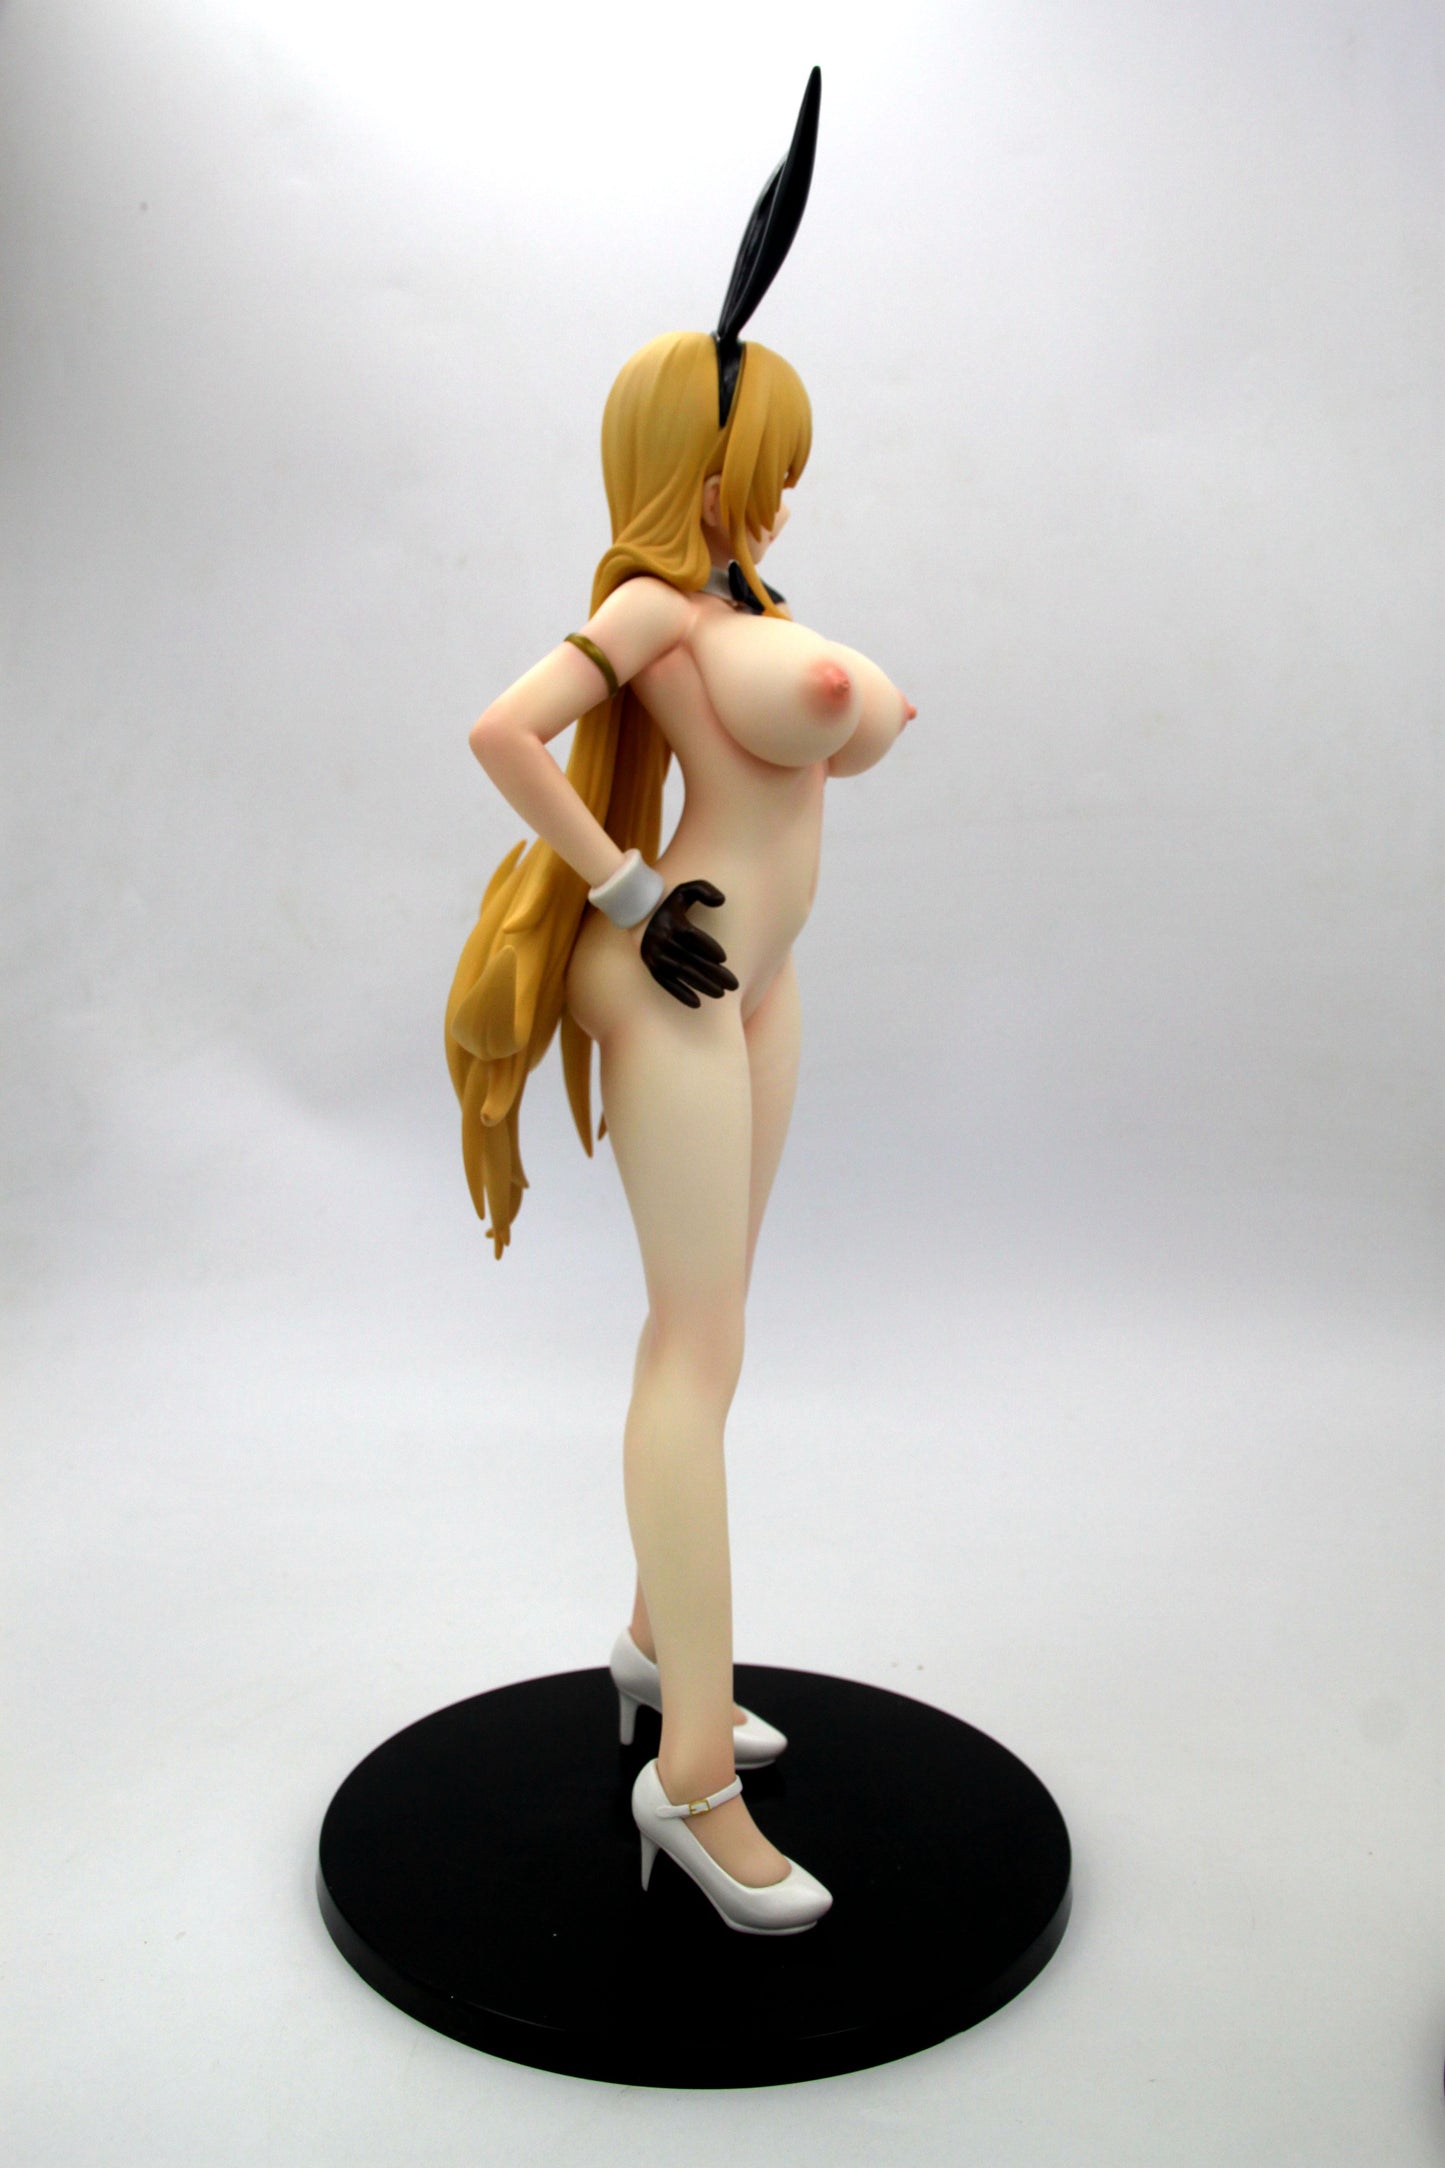 Azur Lane USS North Carolina Bunny Girl 1/4 naked anime figure sexy resin action figures